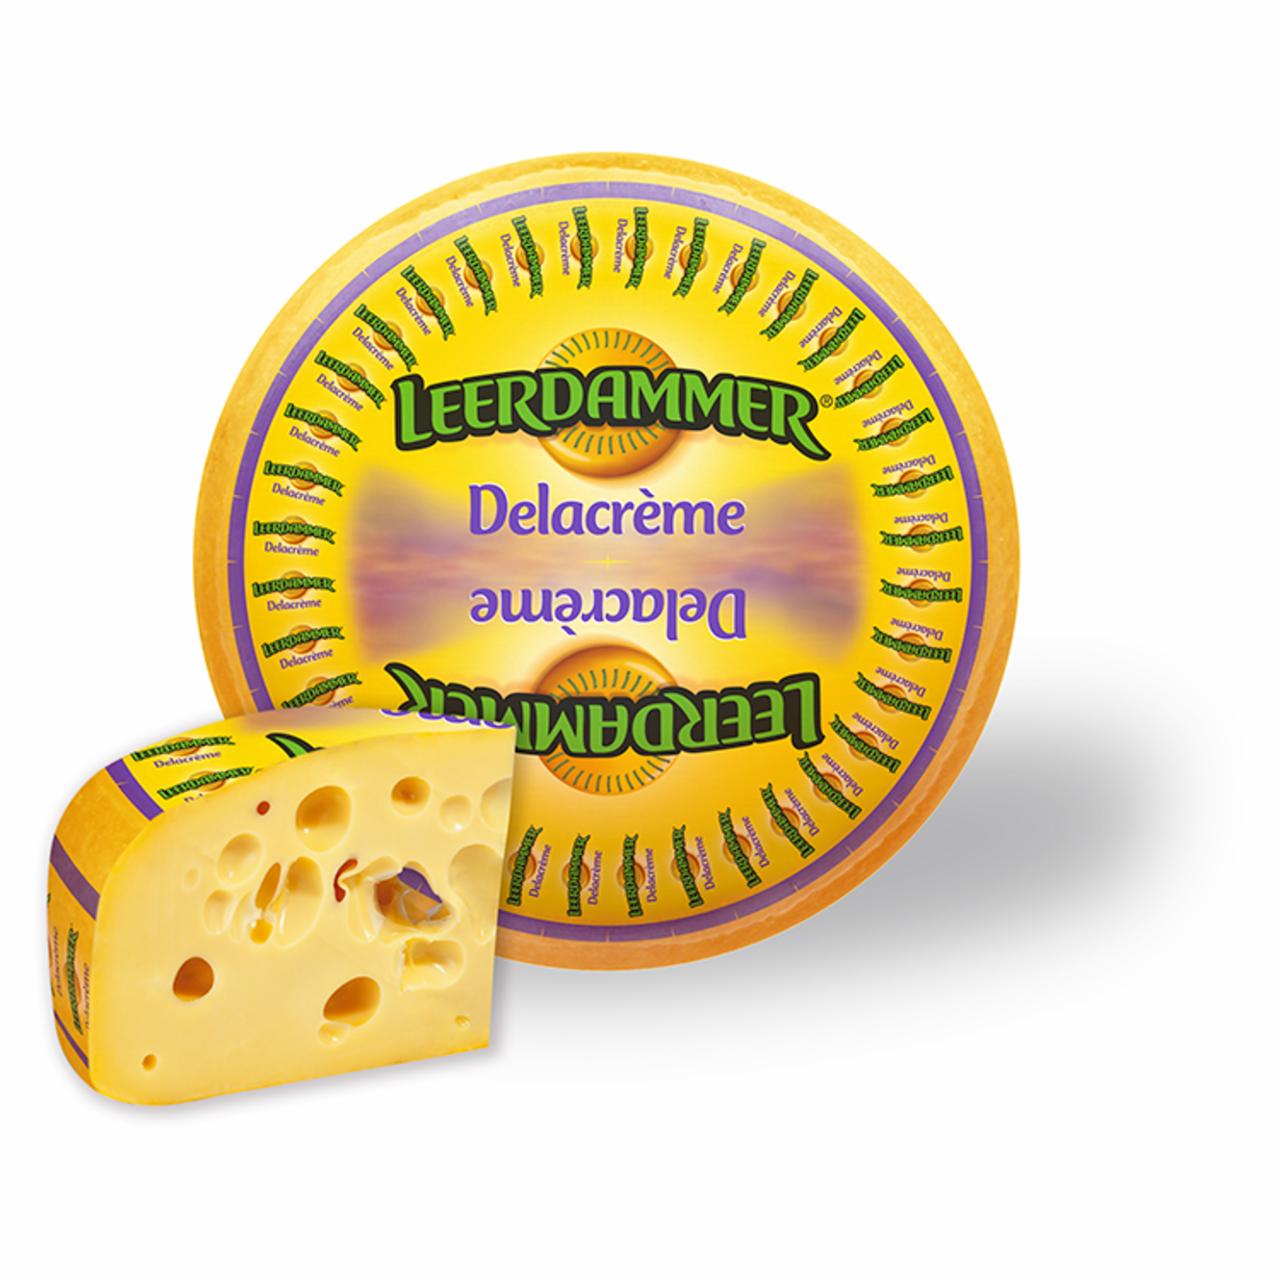 Photo - Leerdammer Delacrème Fat, Semi-Hard Cheese